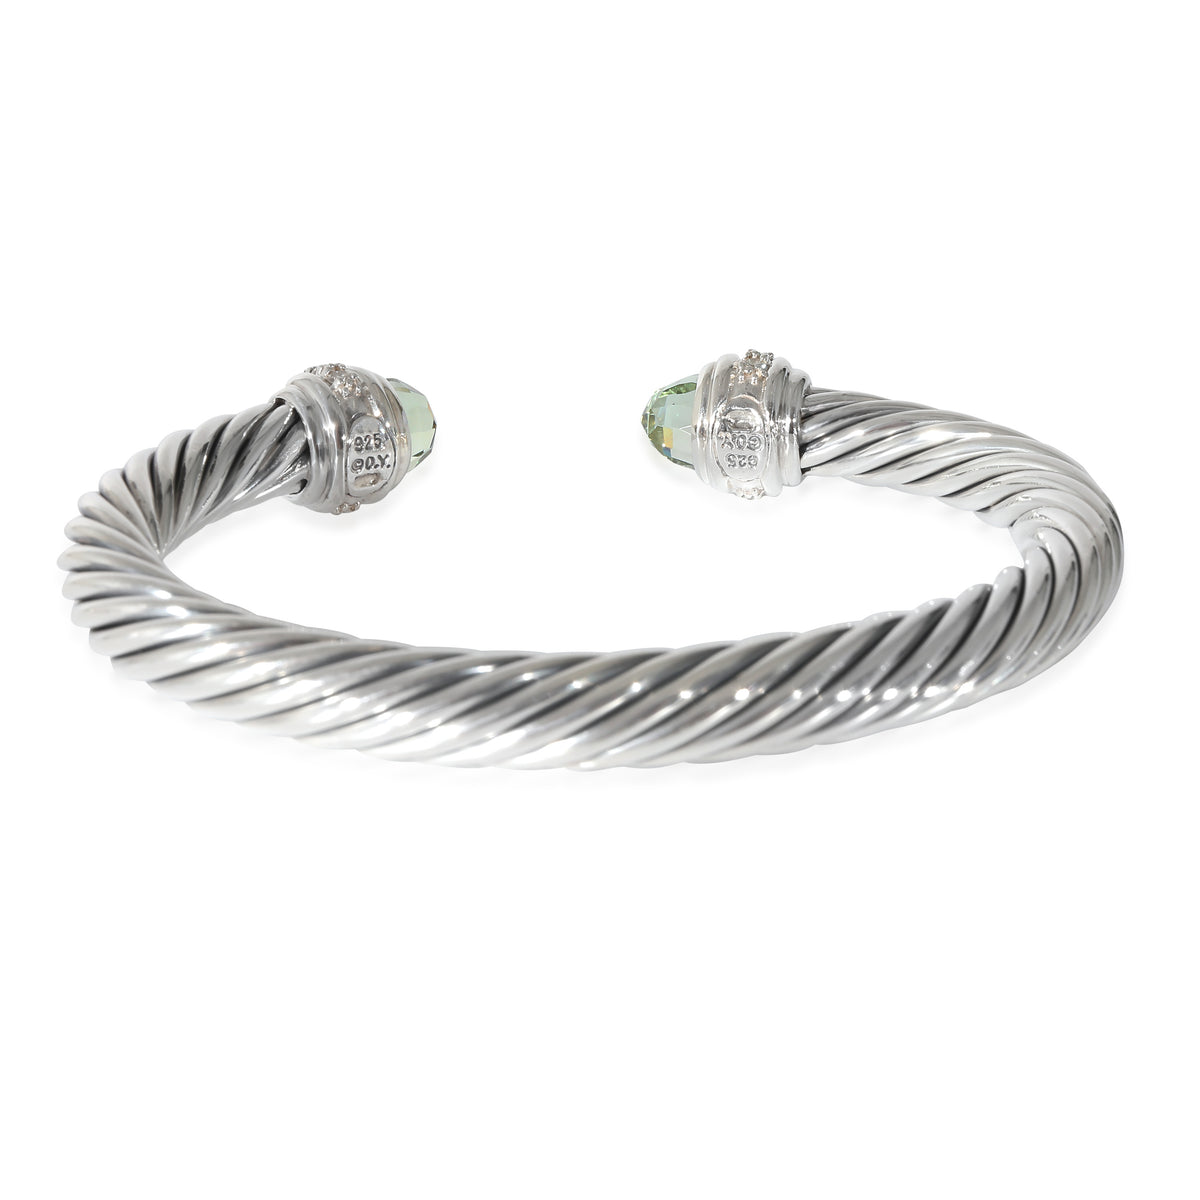 David Yurman Prasiolite Diamond 7mm Cable Bracelet in Sterling Silver 0.41 CTW